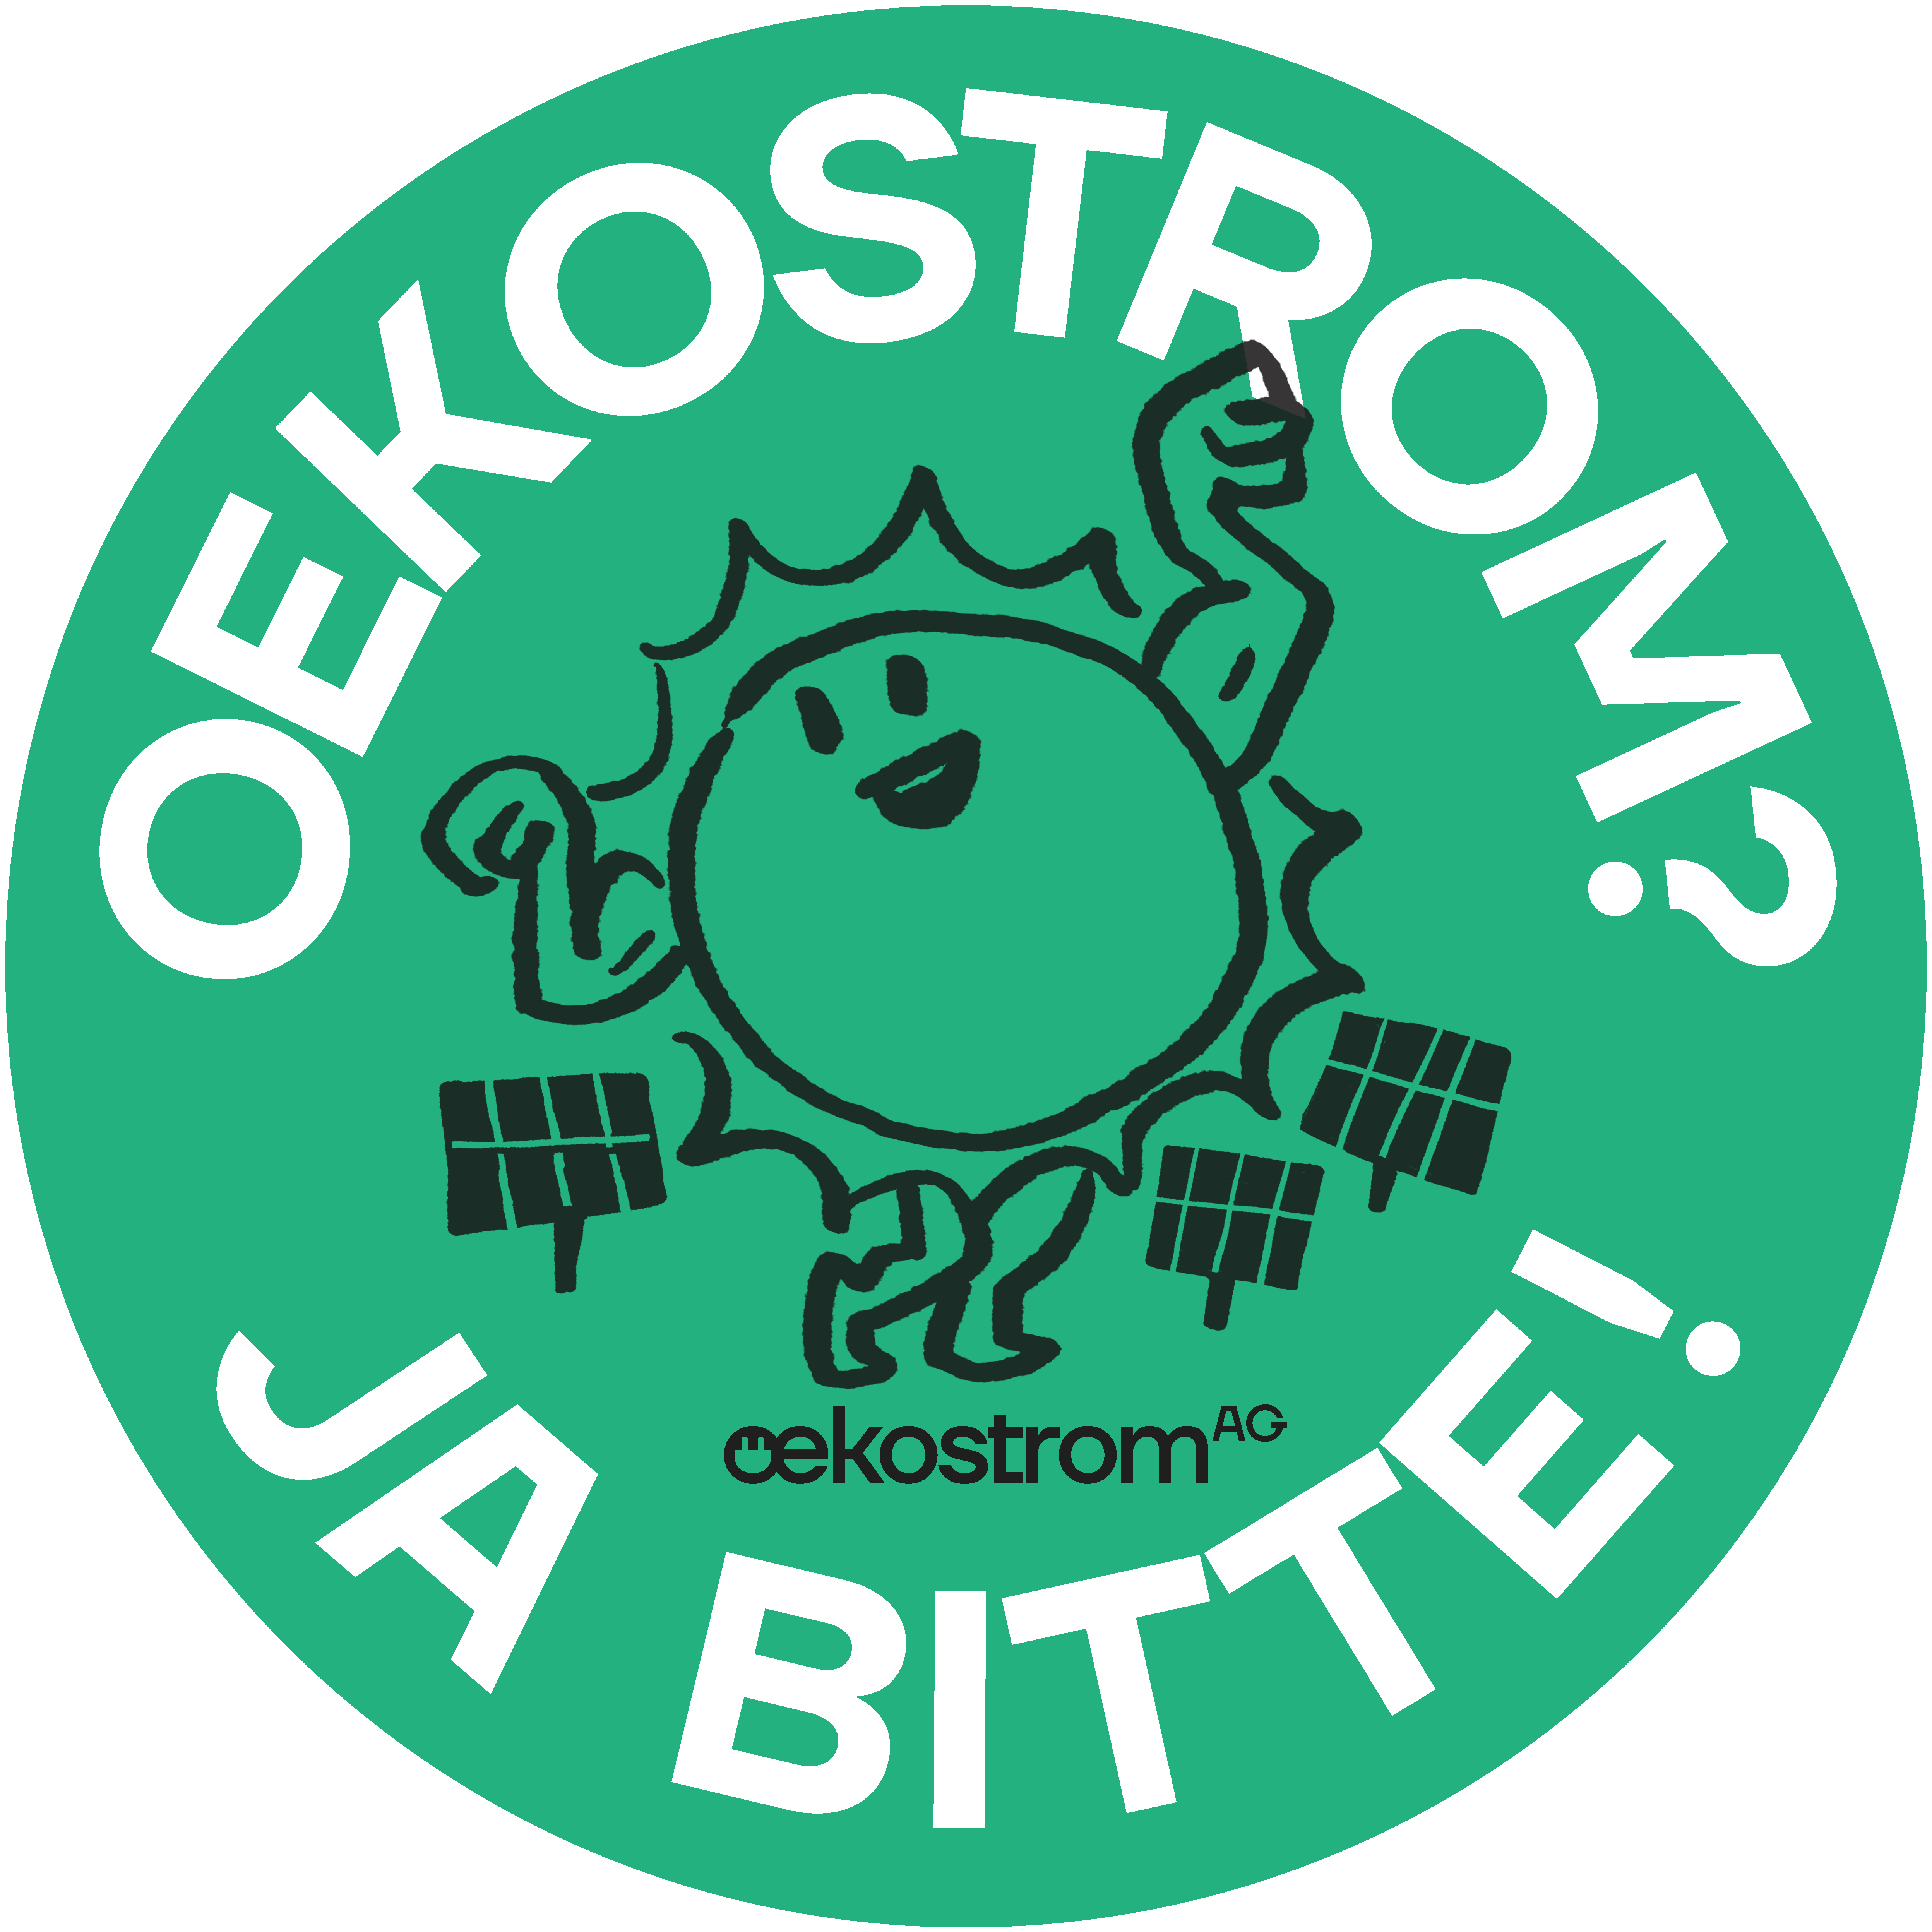 oekostrom AG Green Marketing Packet Sticker